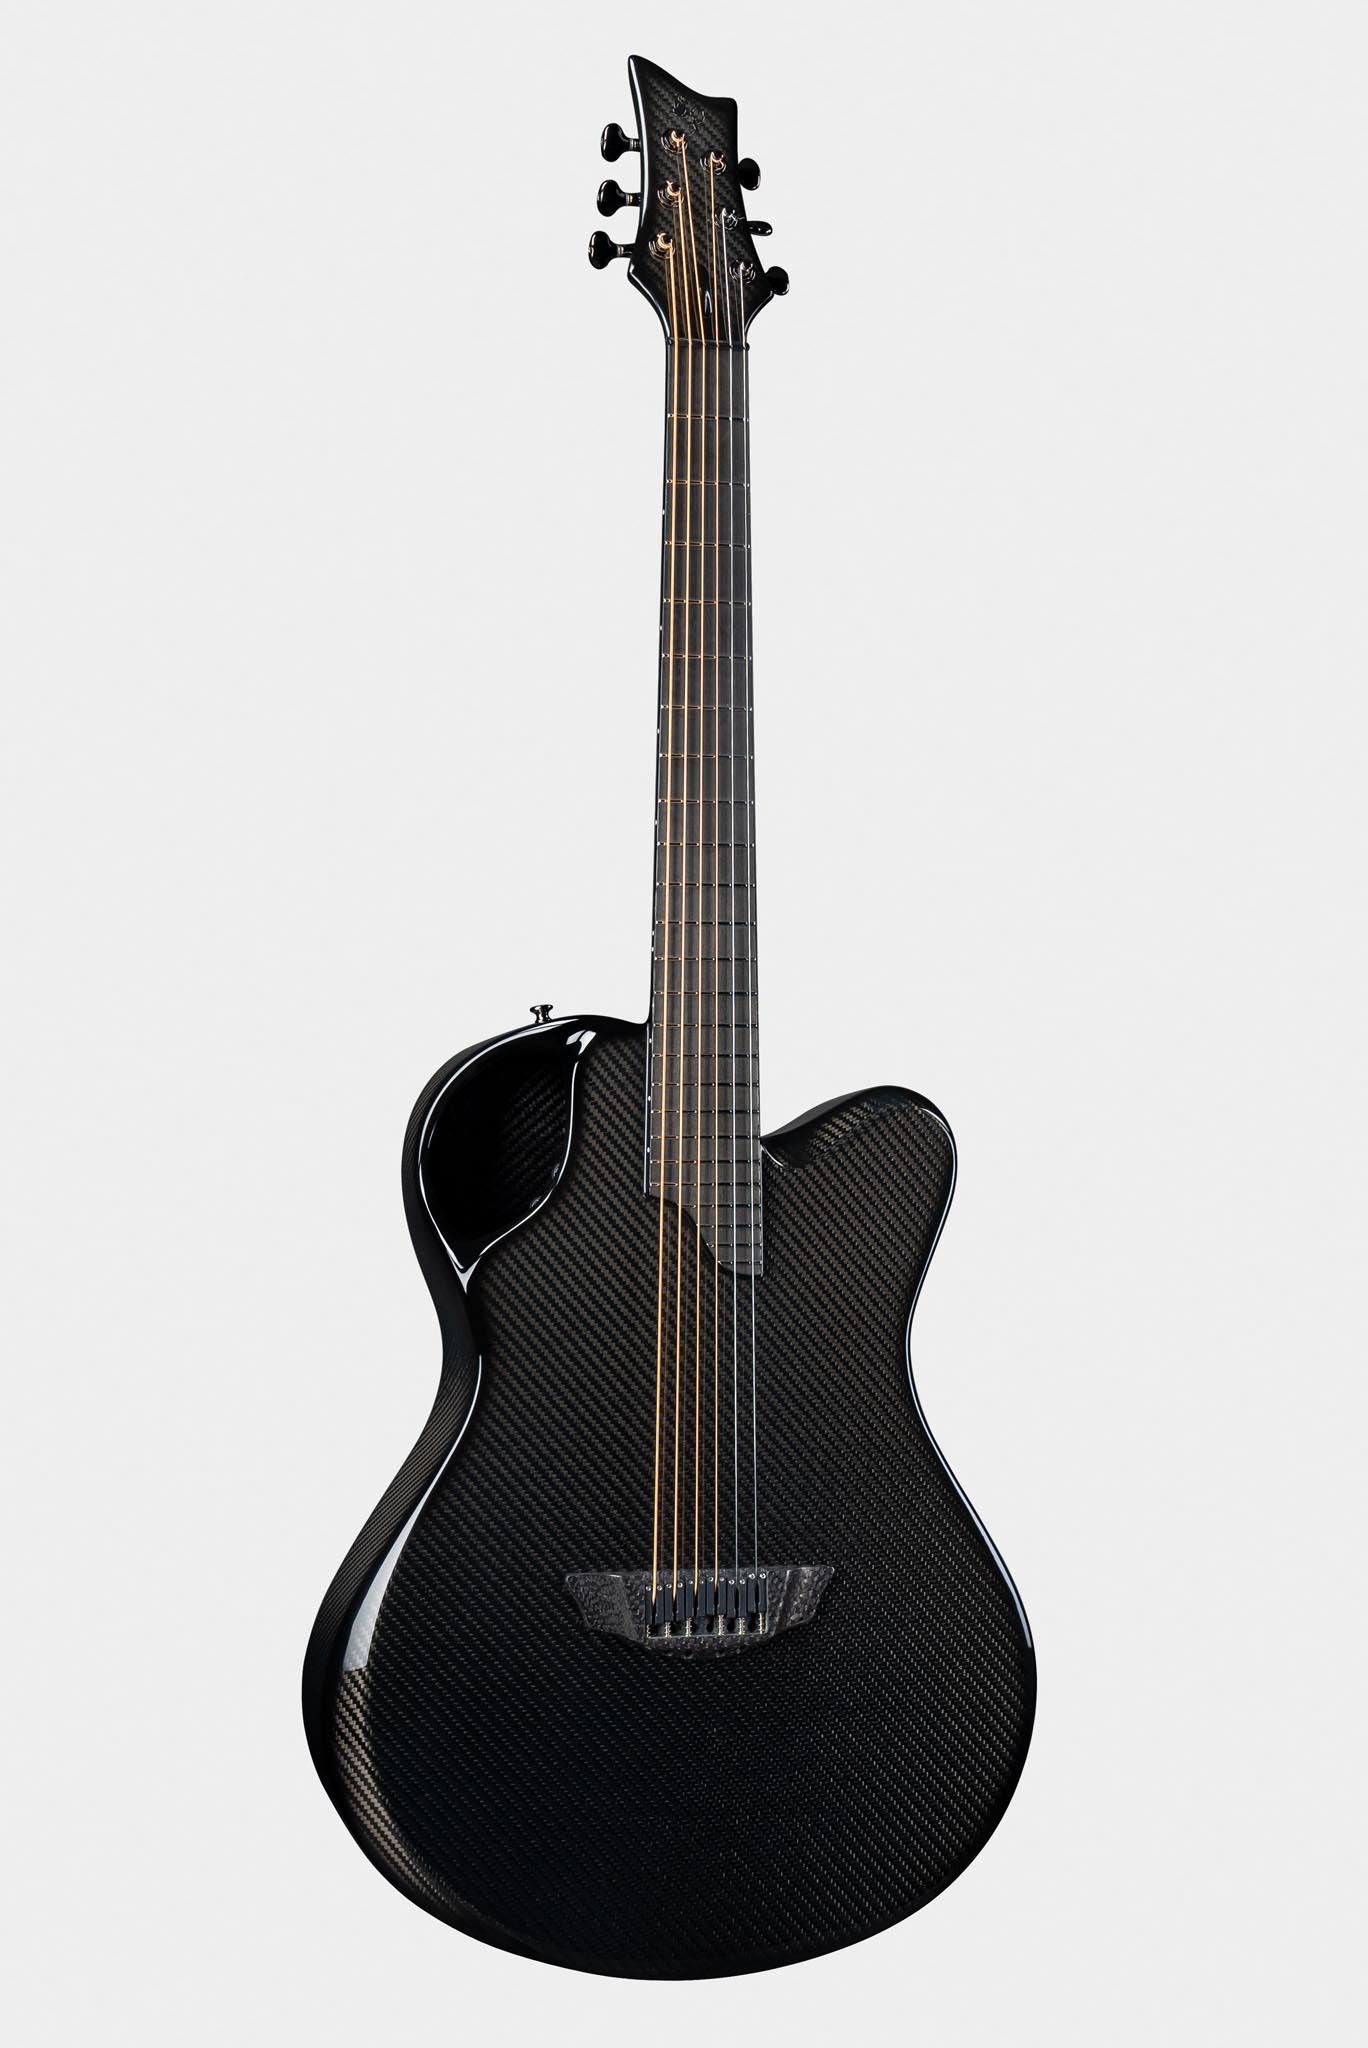 Emerald X20 Carbon Fiber Guitar in Black